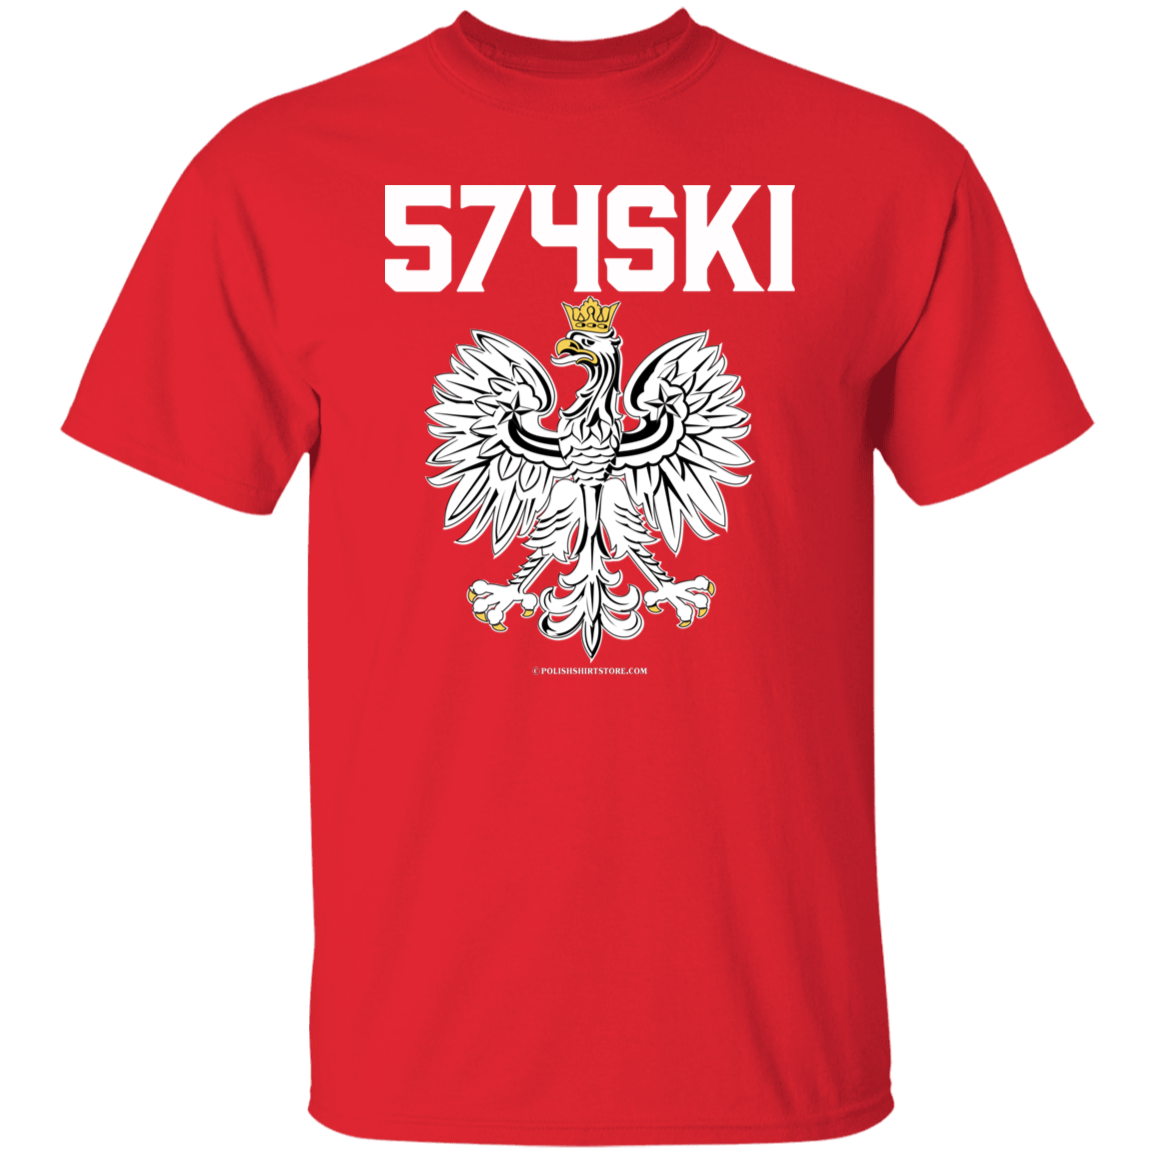 574SKI Apparel CustomCat G500 5.3 oz. T-Shirt Red S